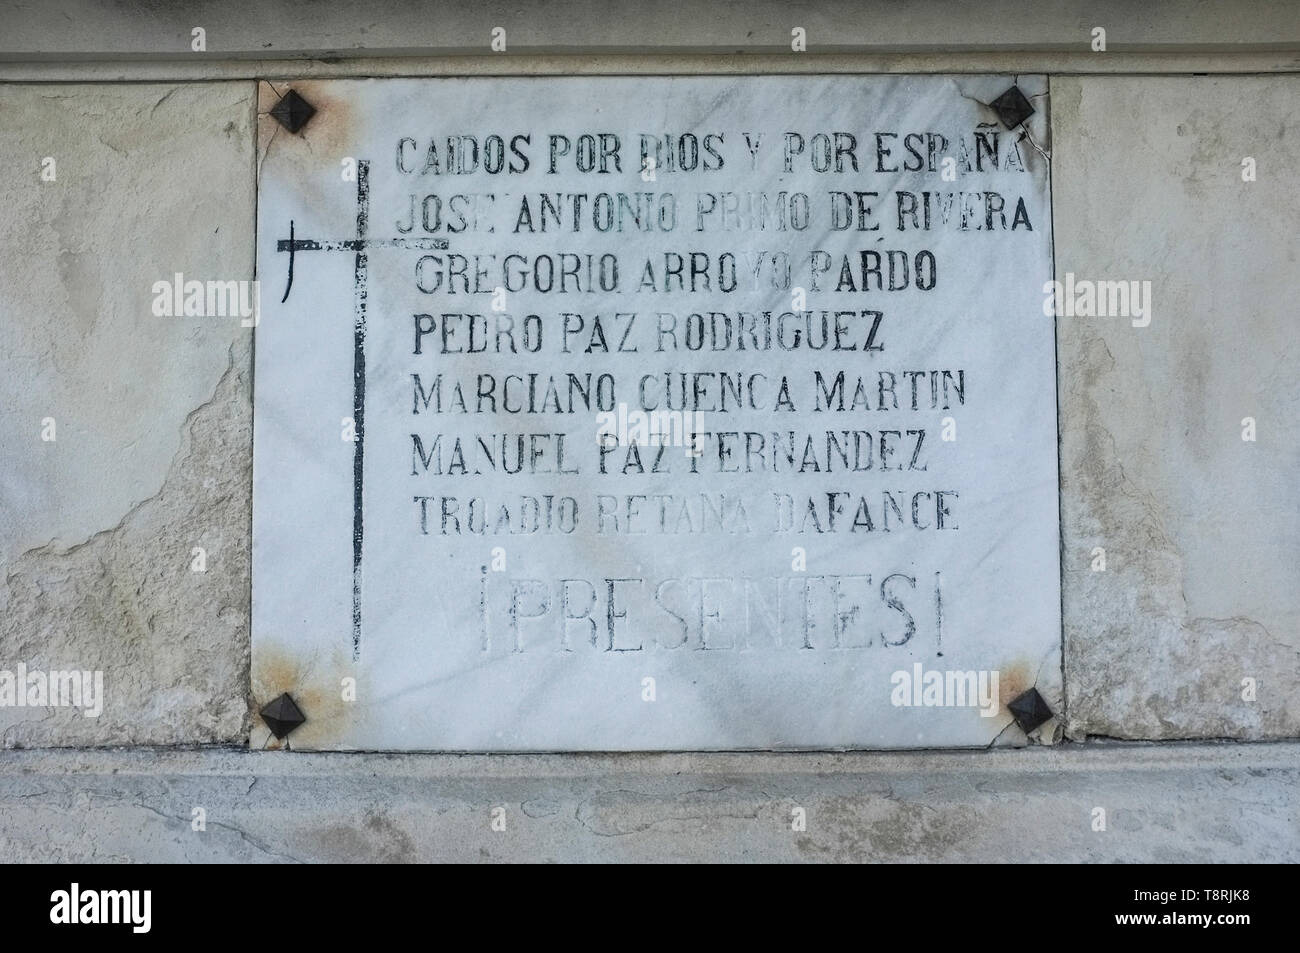 Brunete, Spain - Jun 3rd, 2017: Battle of Brunete Commemorative plaque. Symbols honouring the dictatorship of dictator Francisco Franco attached to wa Stock Photo